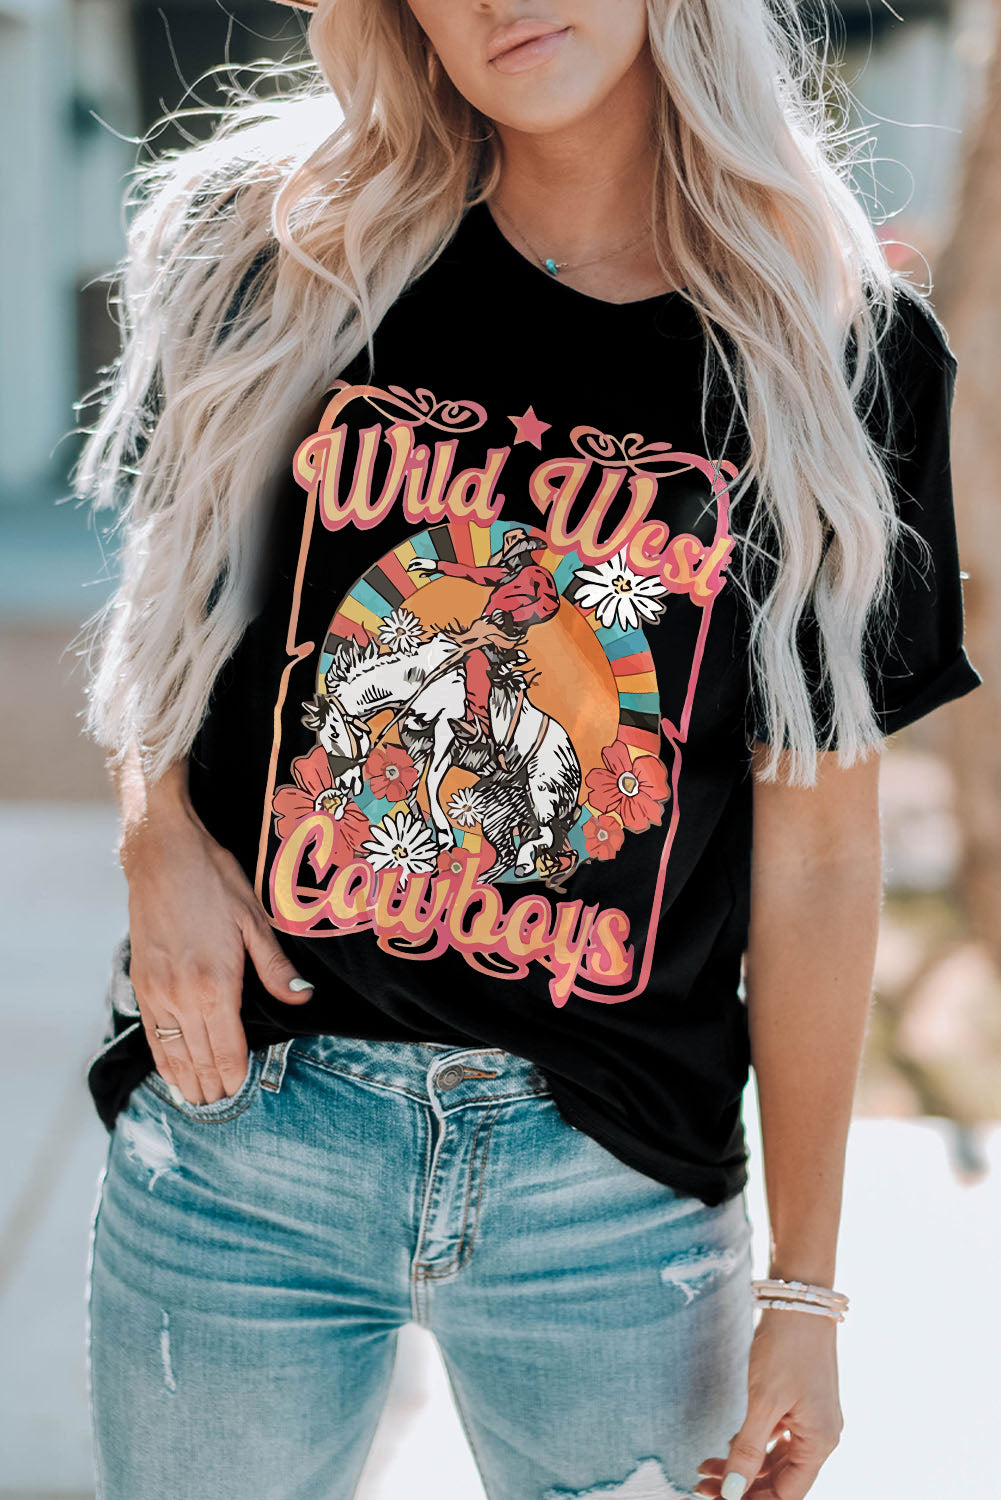 WILD WEST COWBOYS Graphic Tee Shirt Trendsi